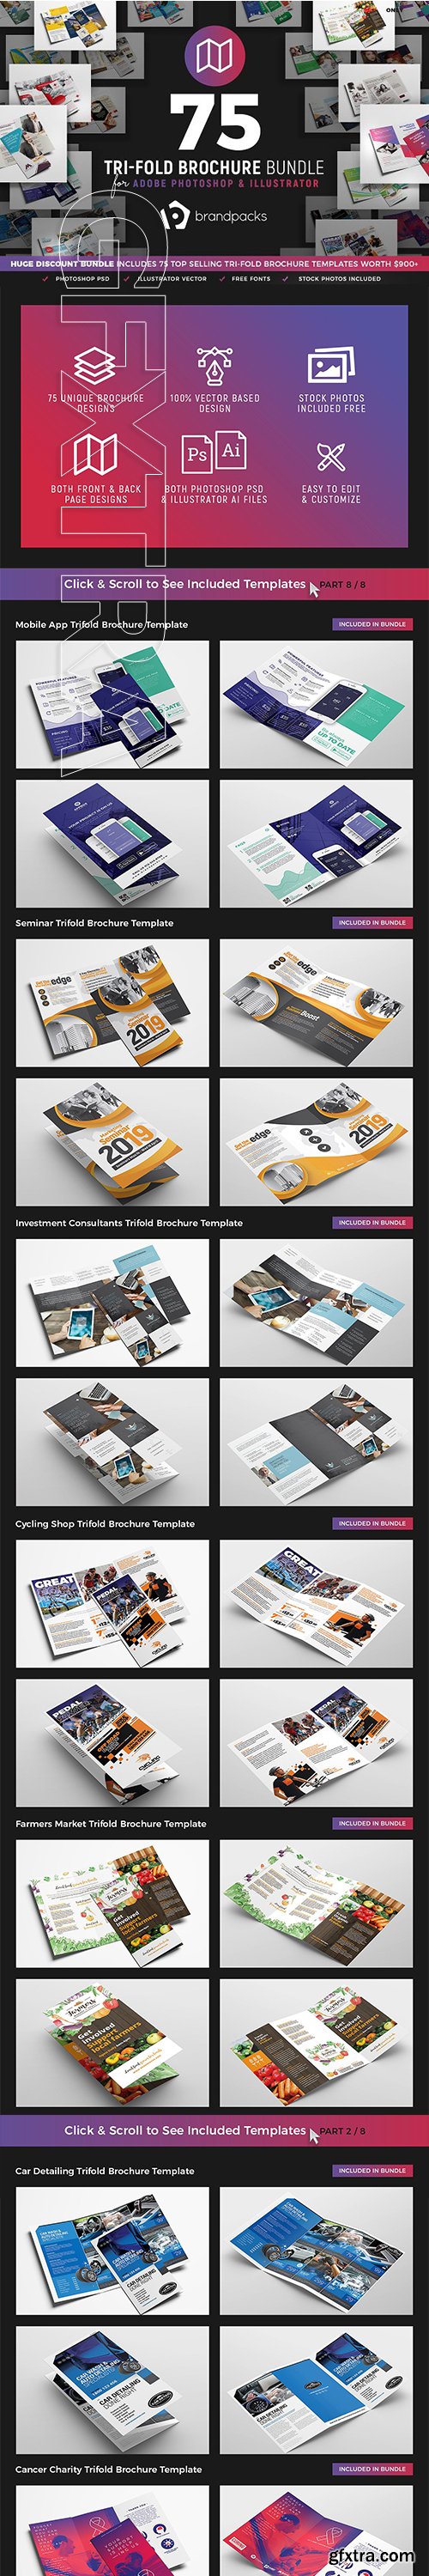 CreativeMarket - 75 Trifold Brochure Templates Bundle 3005157